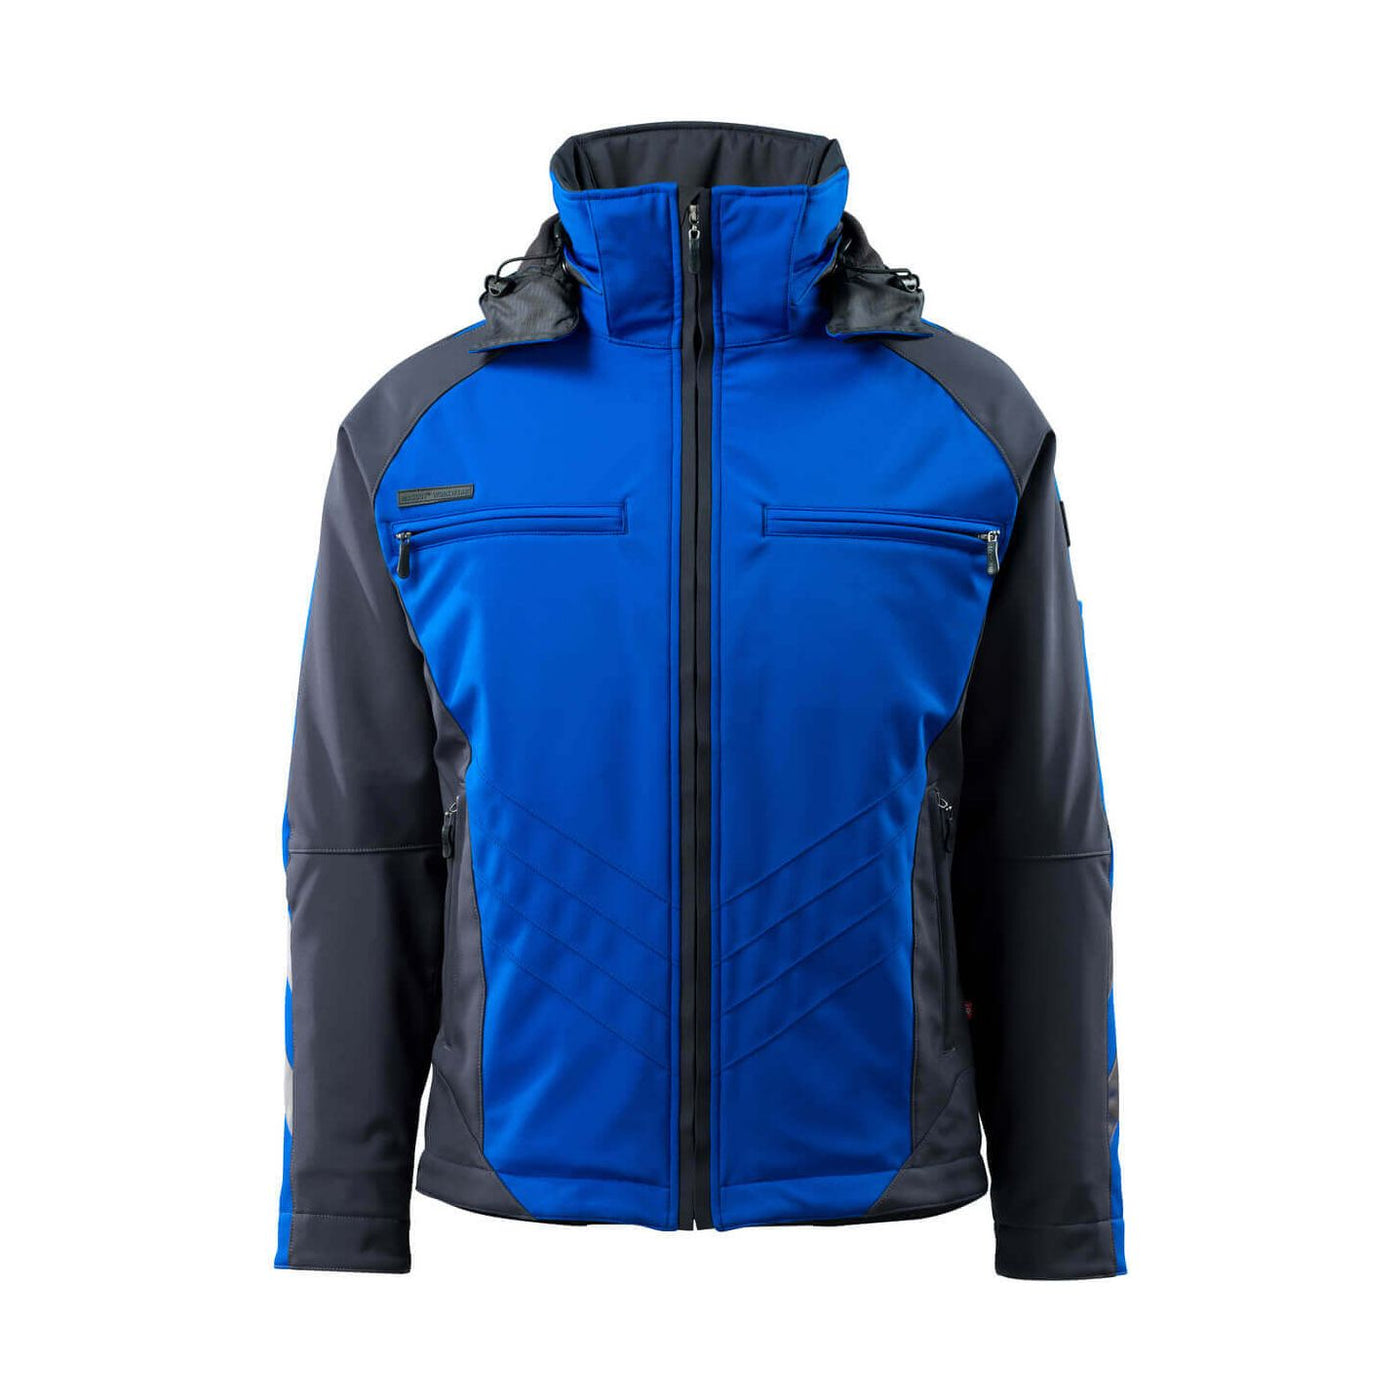 Mascot Darmstadt Winter Jacket 16002-149 Front #colour_royal-blue-dark-navy-blue